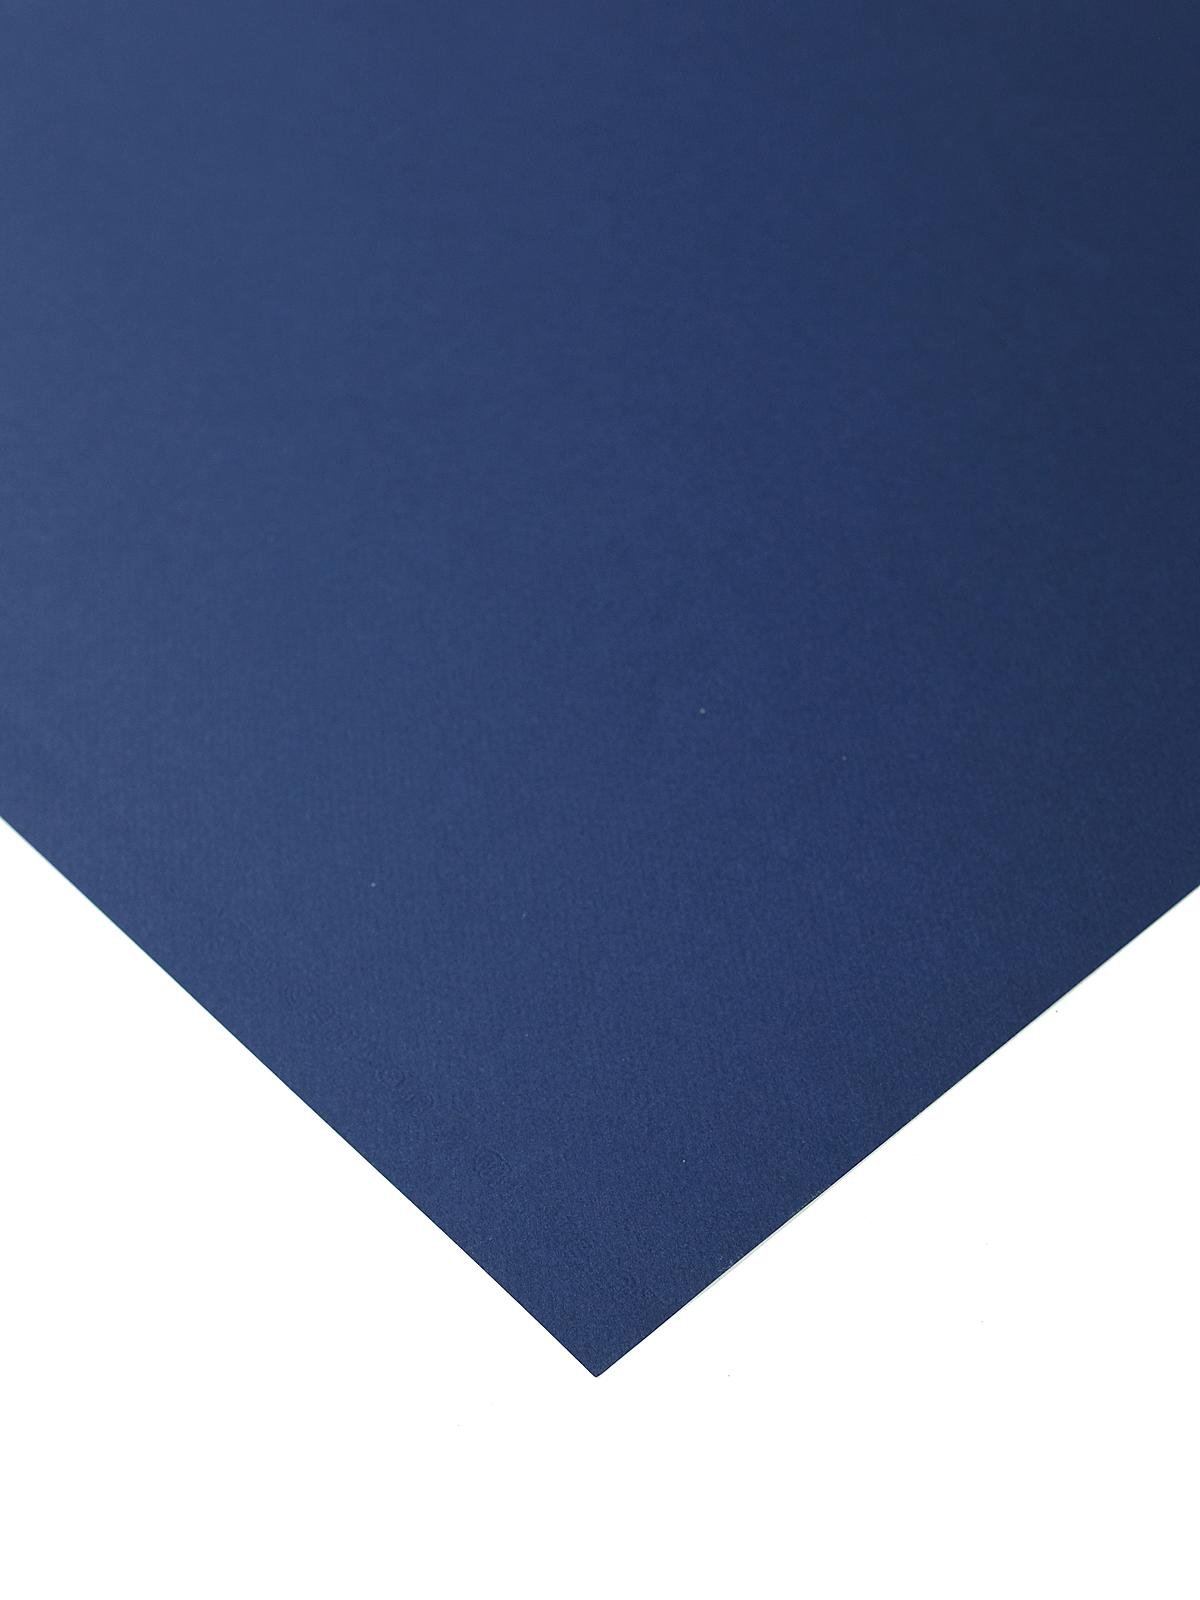 A4 Petrol Blue Textured Paper